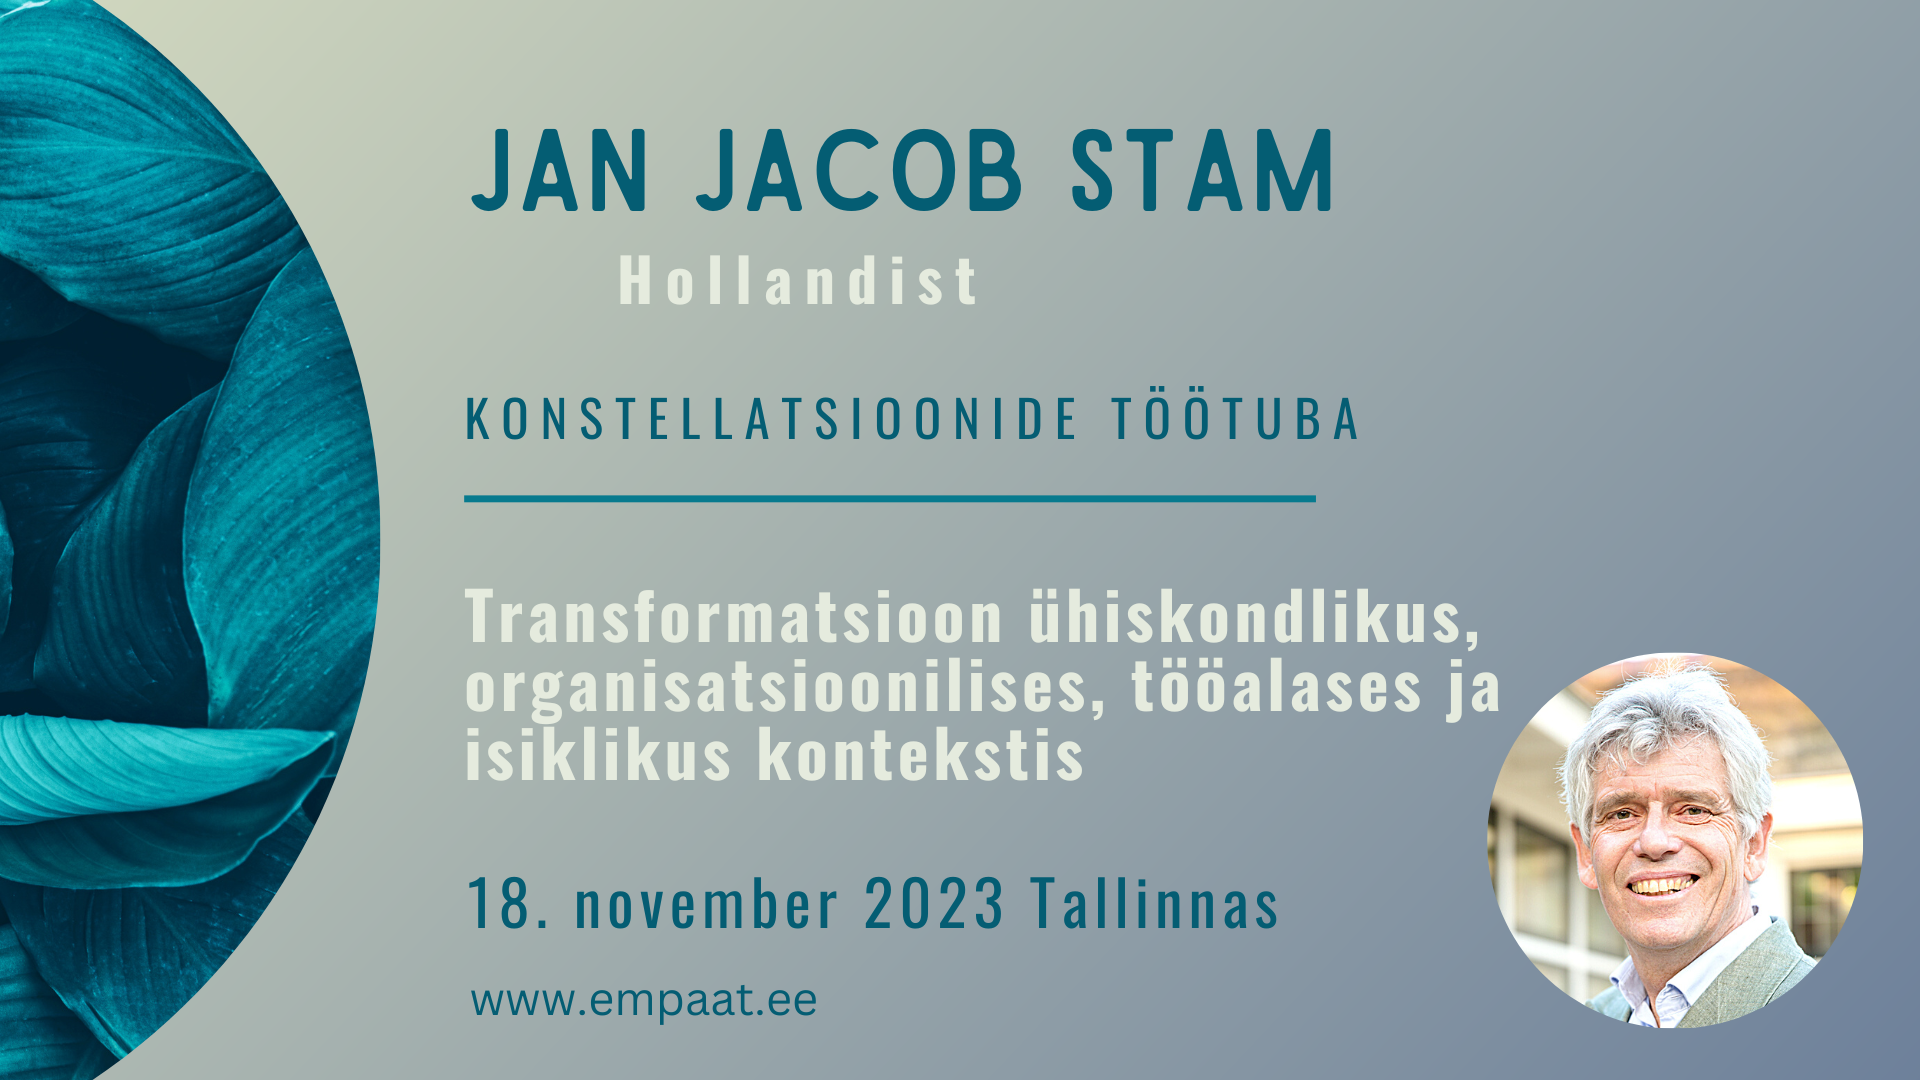 Jan Jacob Stam